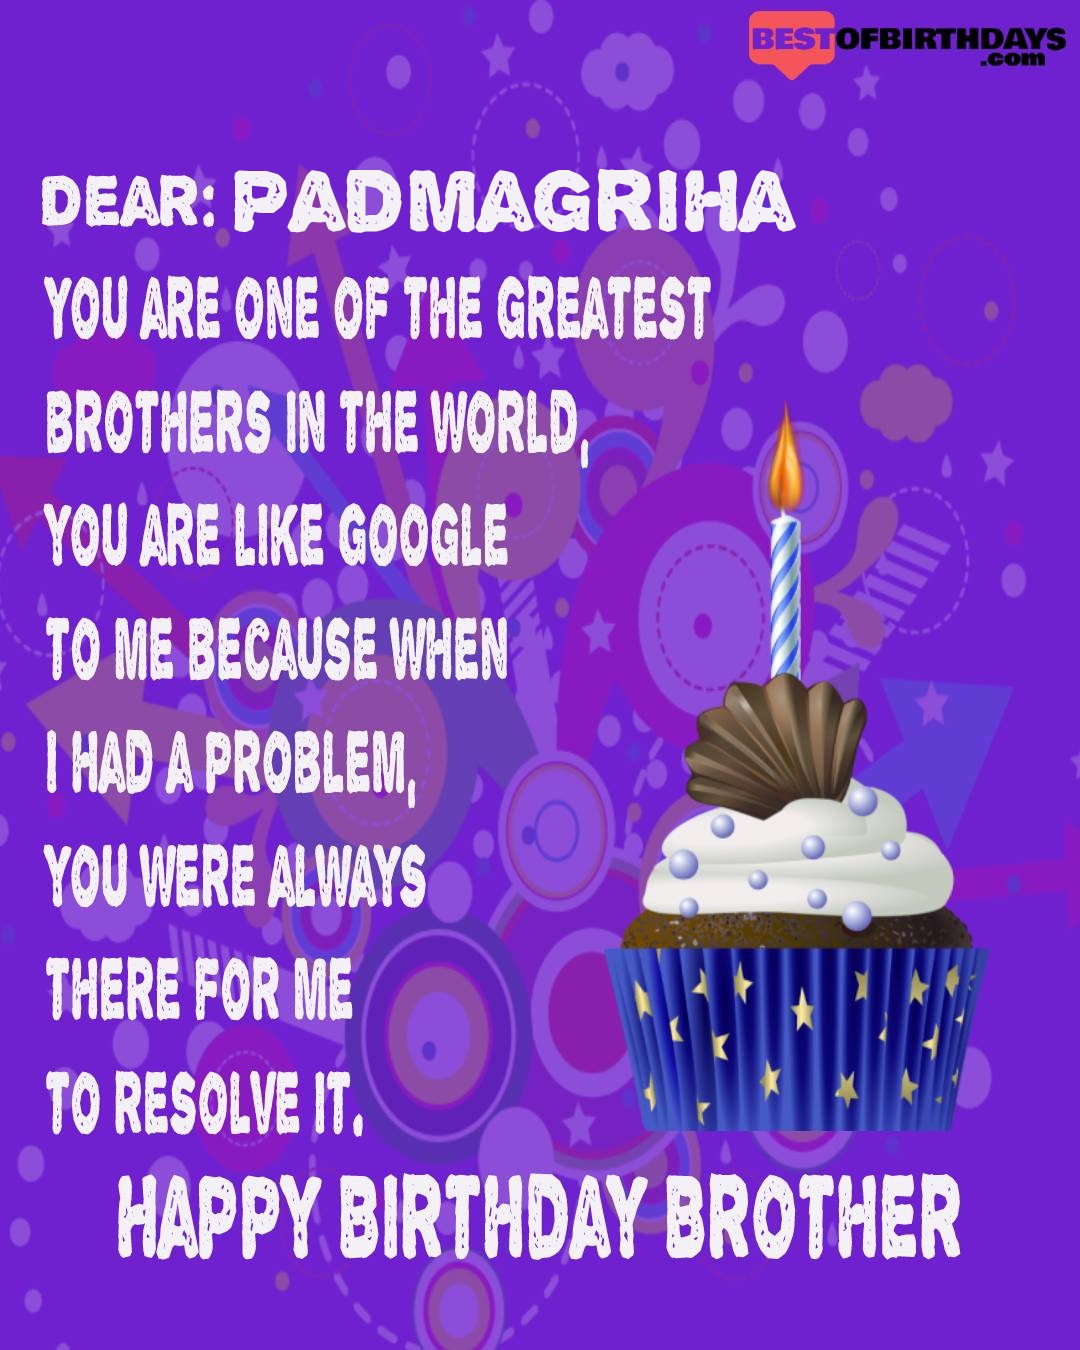 Happy birthday padmagriha bhai brother bro